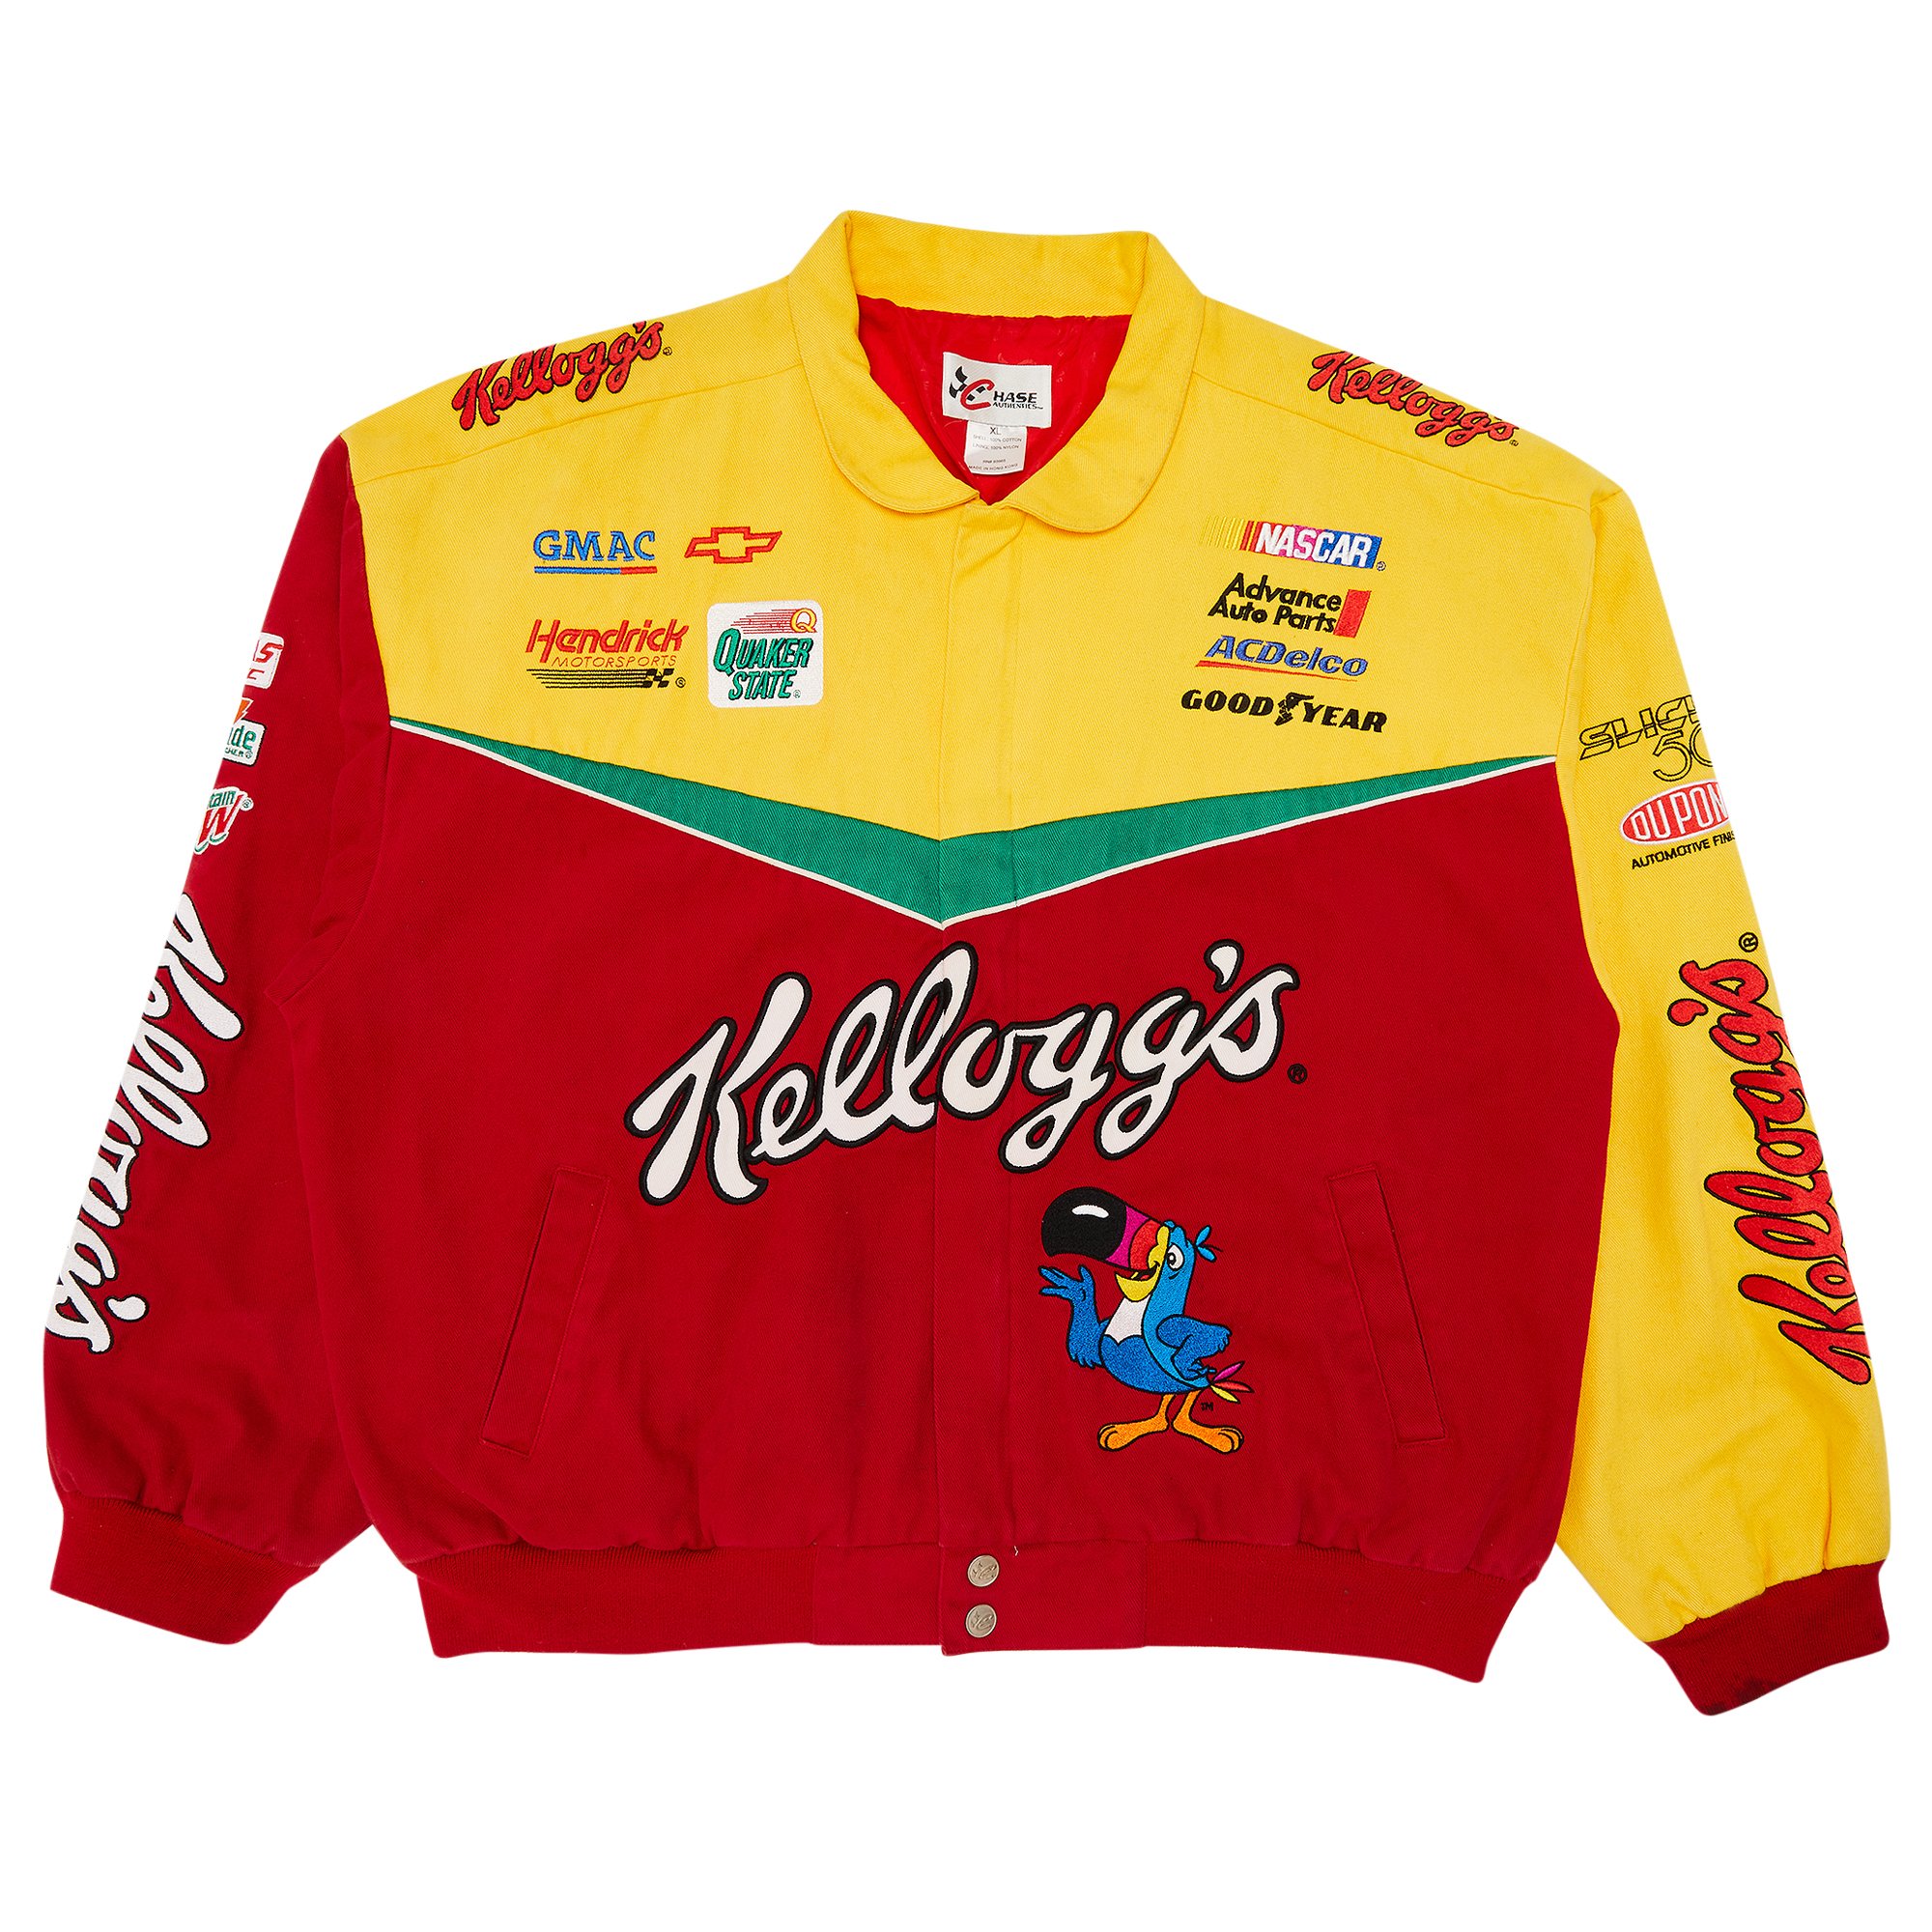 Chase Authentics Vintage Kellogg's Nascar Racing Jacket 'Red 